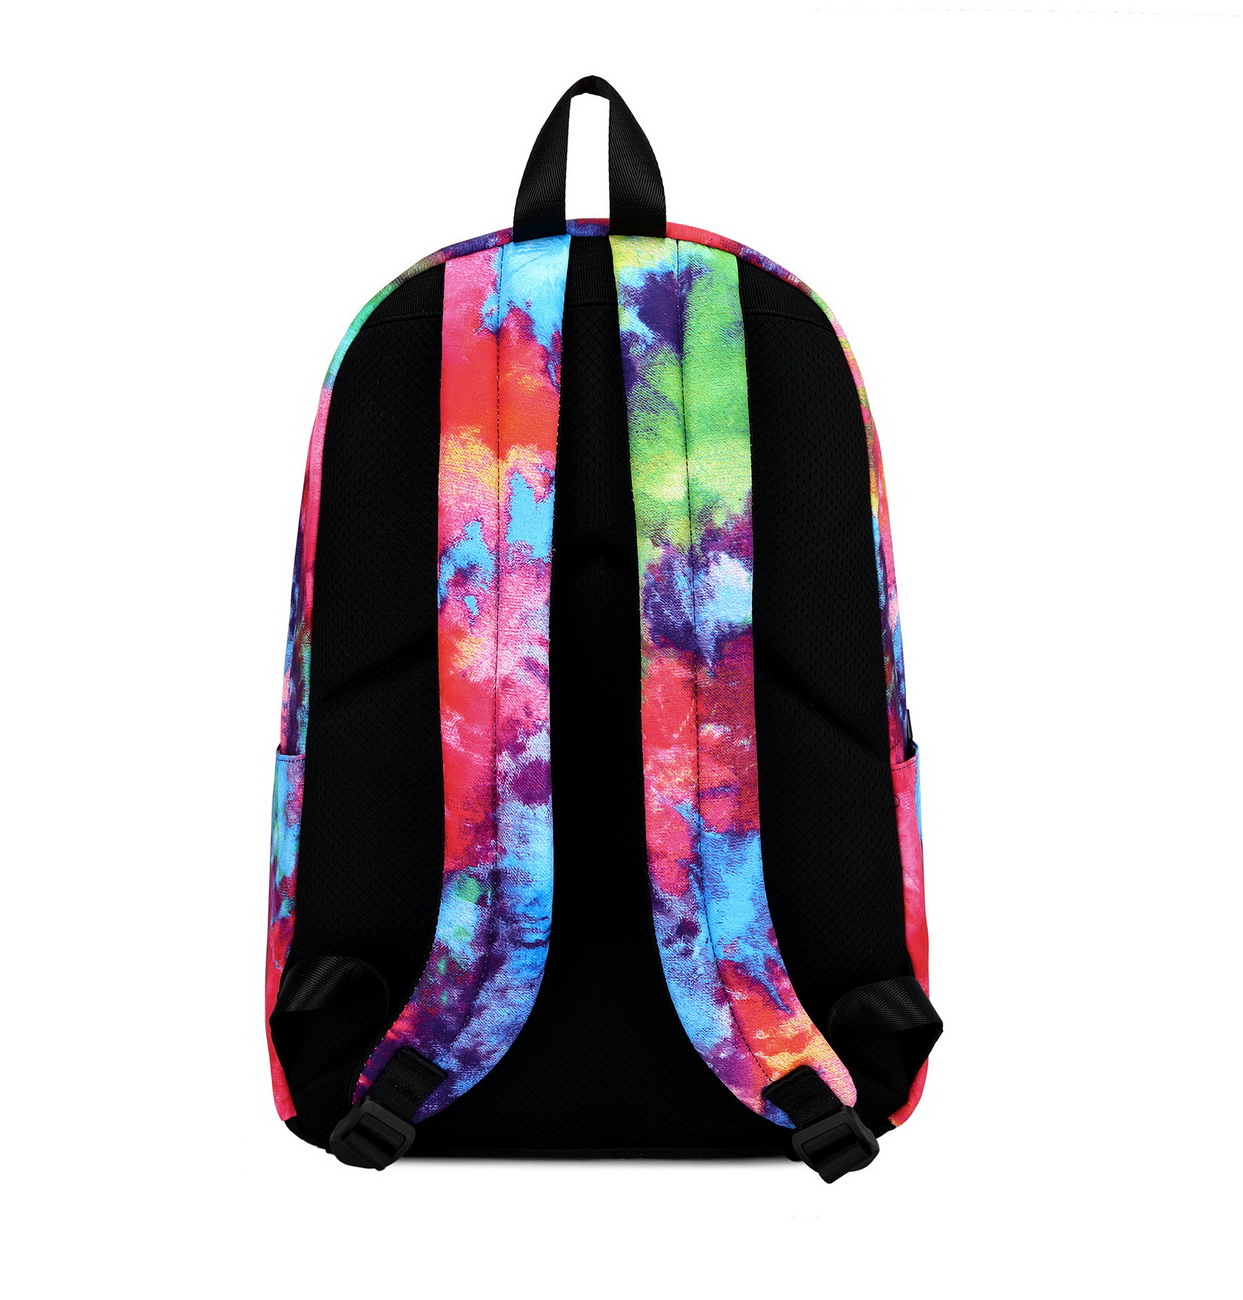 JAYGULF Stylish School Backpack For Girl